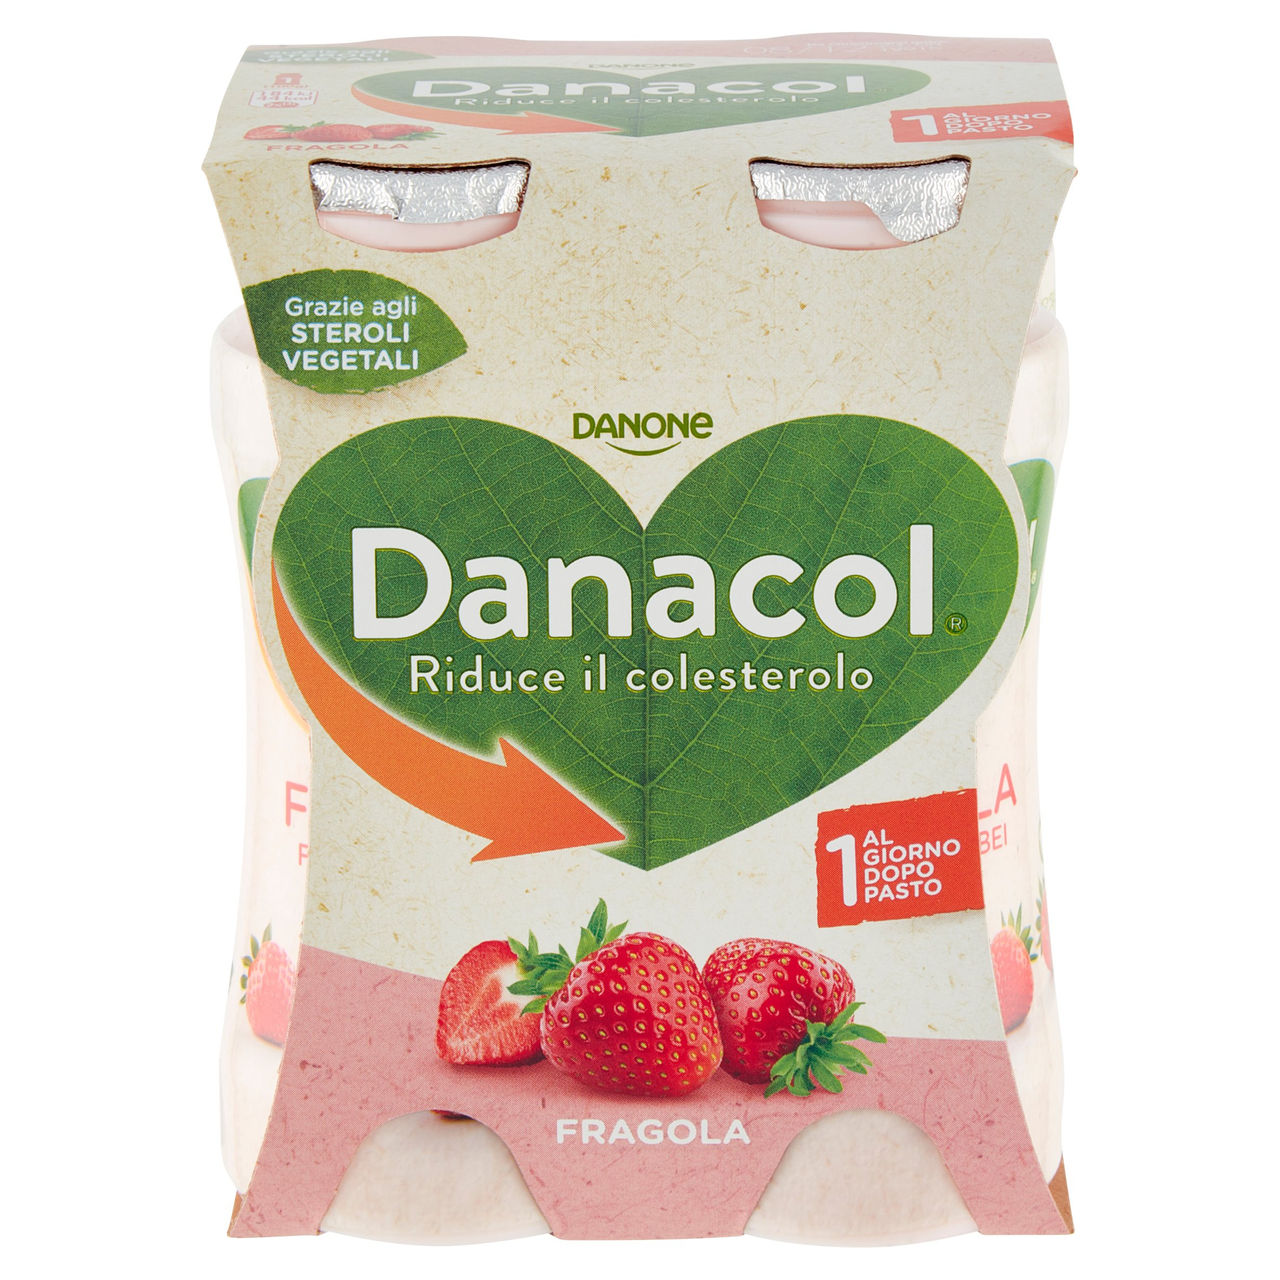 Danacol Fragola 4 x 100 g